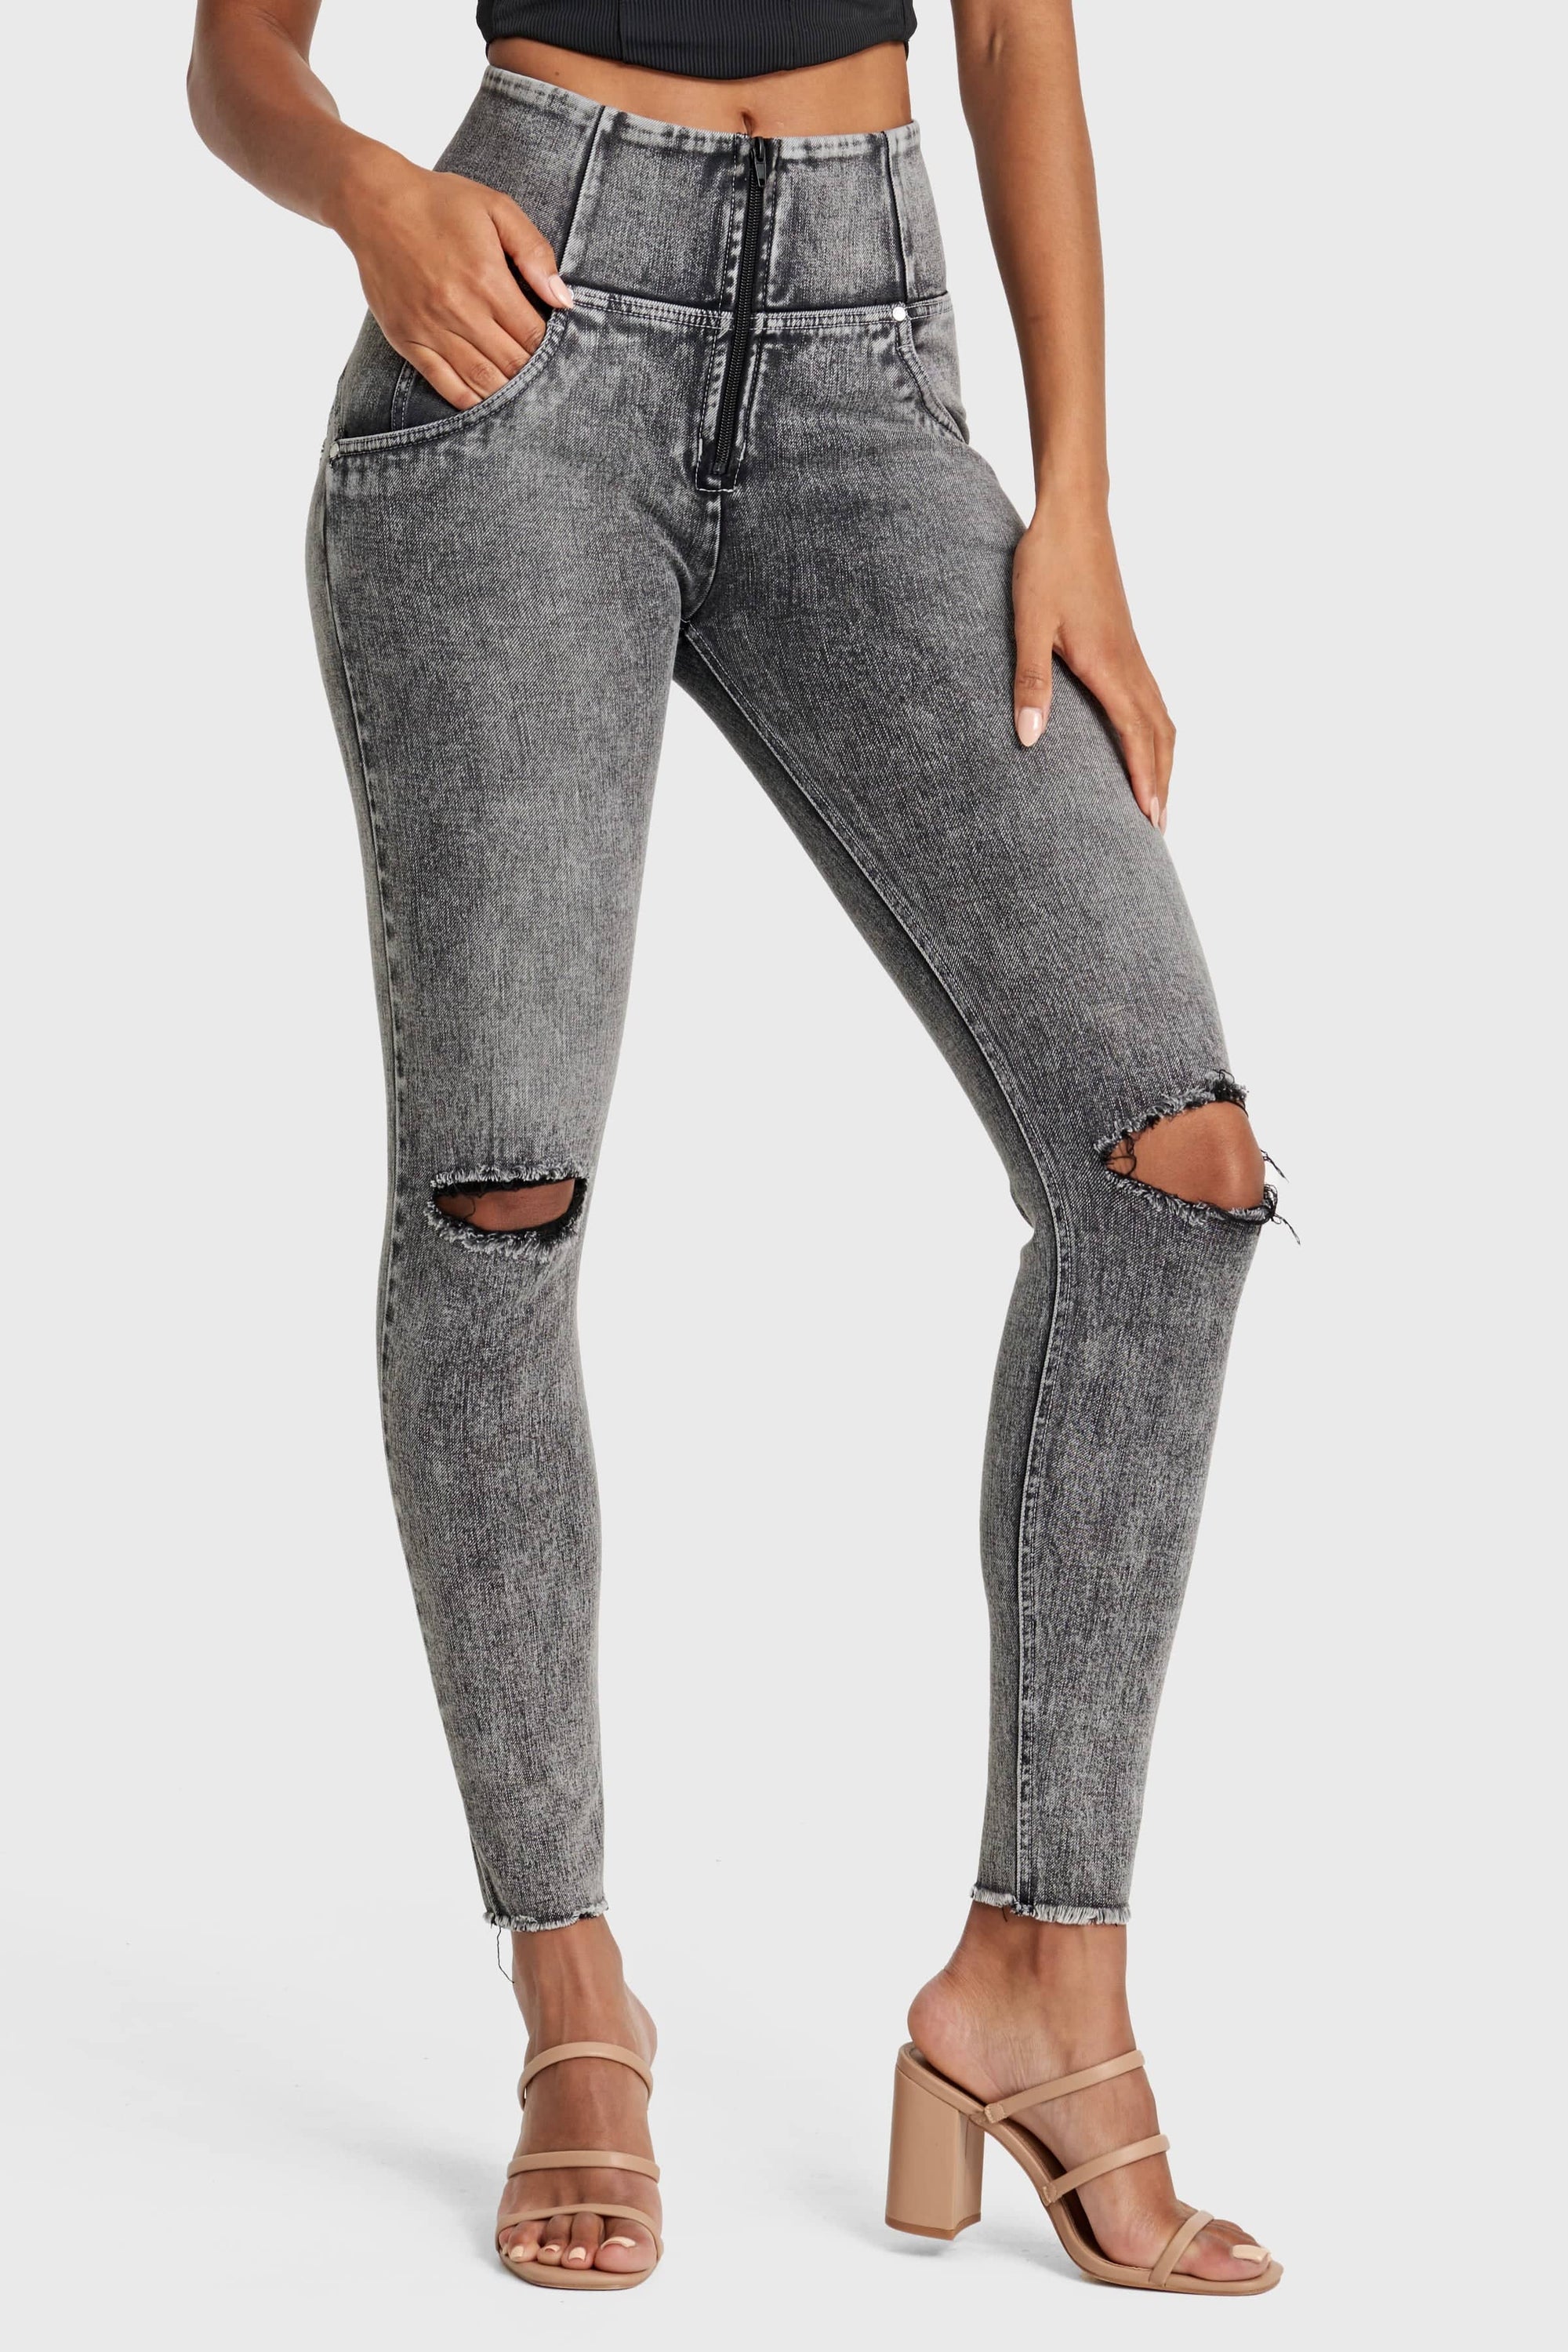 WR.UP® Snug Ripped Jeans - High Waisted - Full Length - Grey Stonewash + Grey Stitching 7